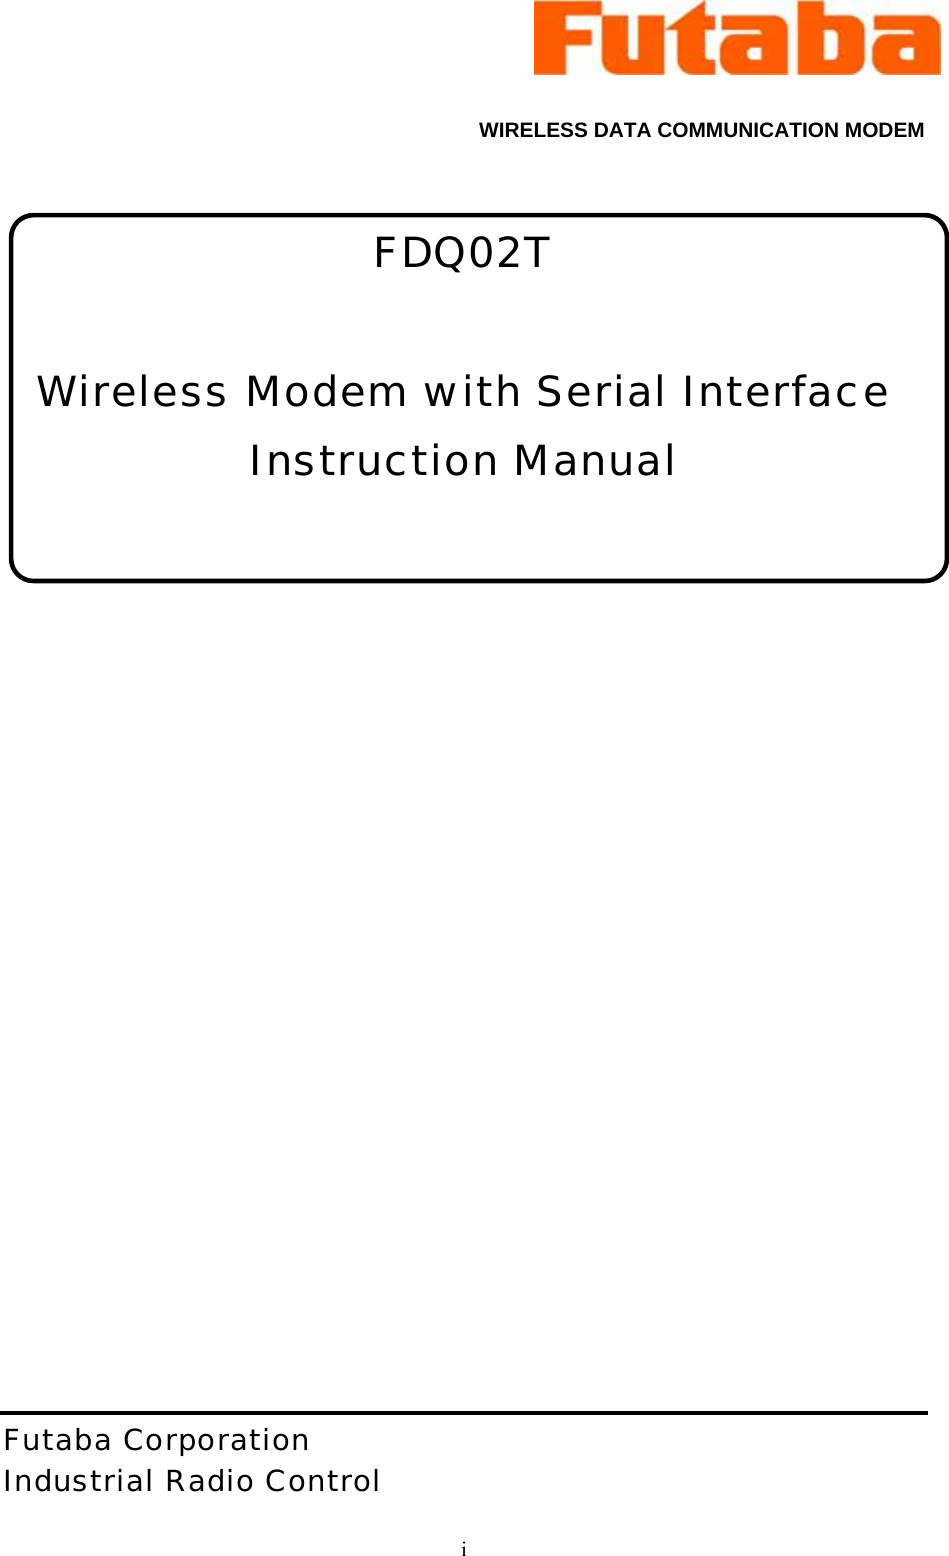  i WIRELESS DATA COMMUNICATION MODEM  FDQ02T   Wireless Modem with Serial Interface Instruction Manual                      Futaba Corporation Industrial Radio Control 